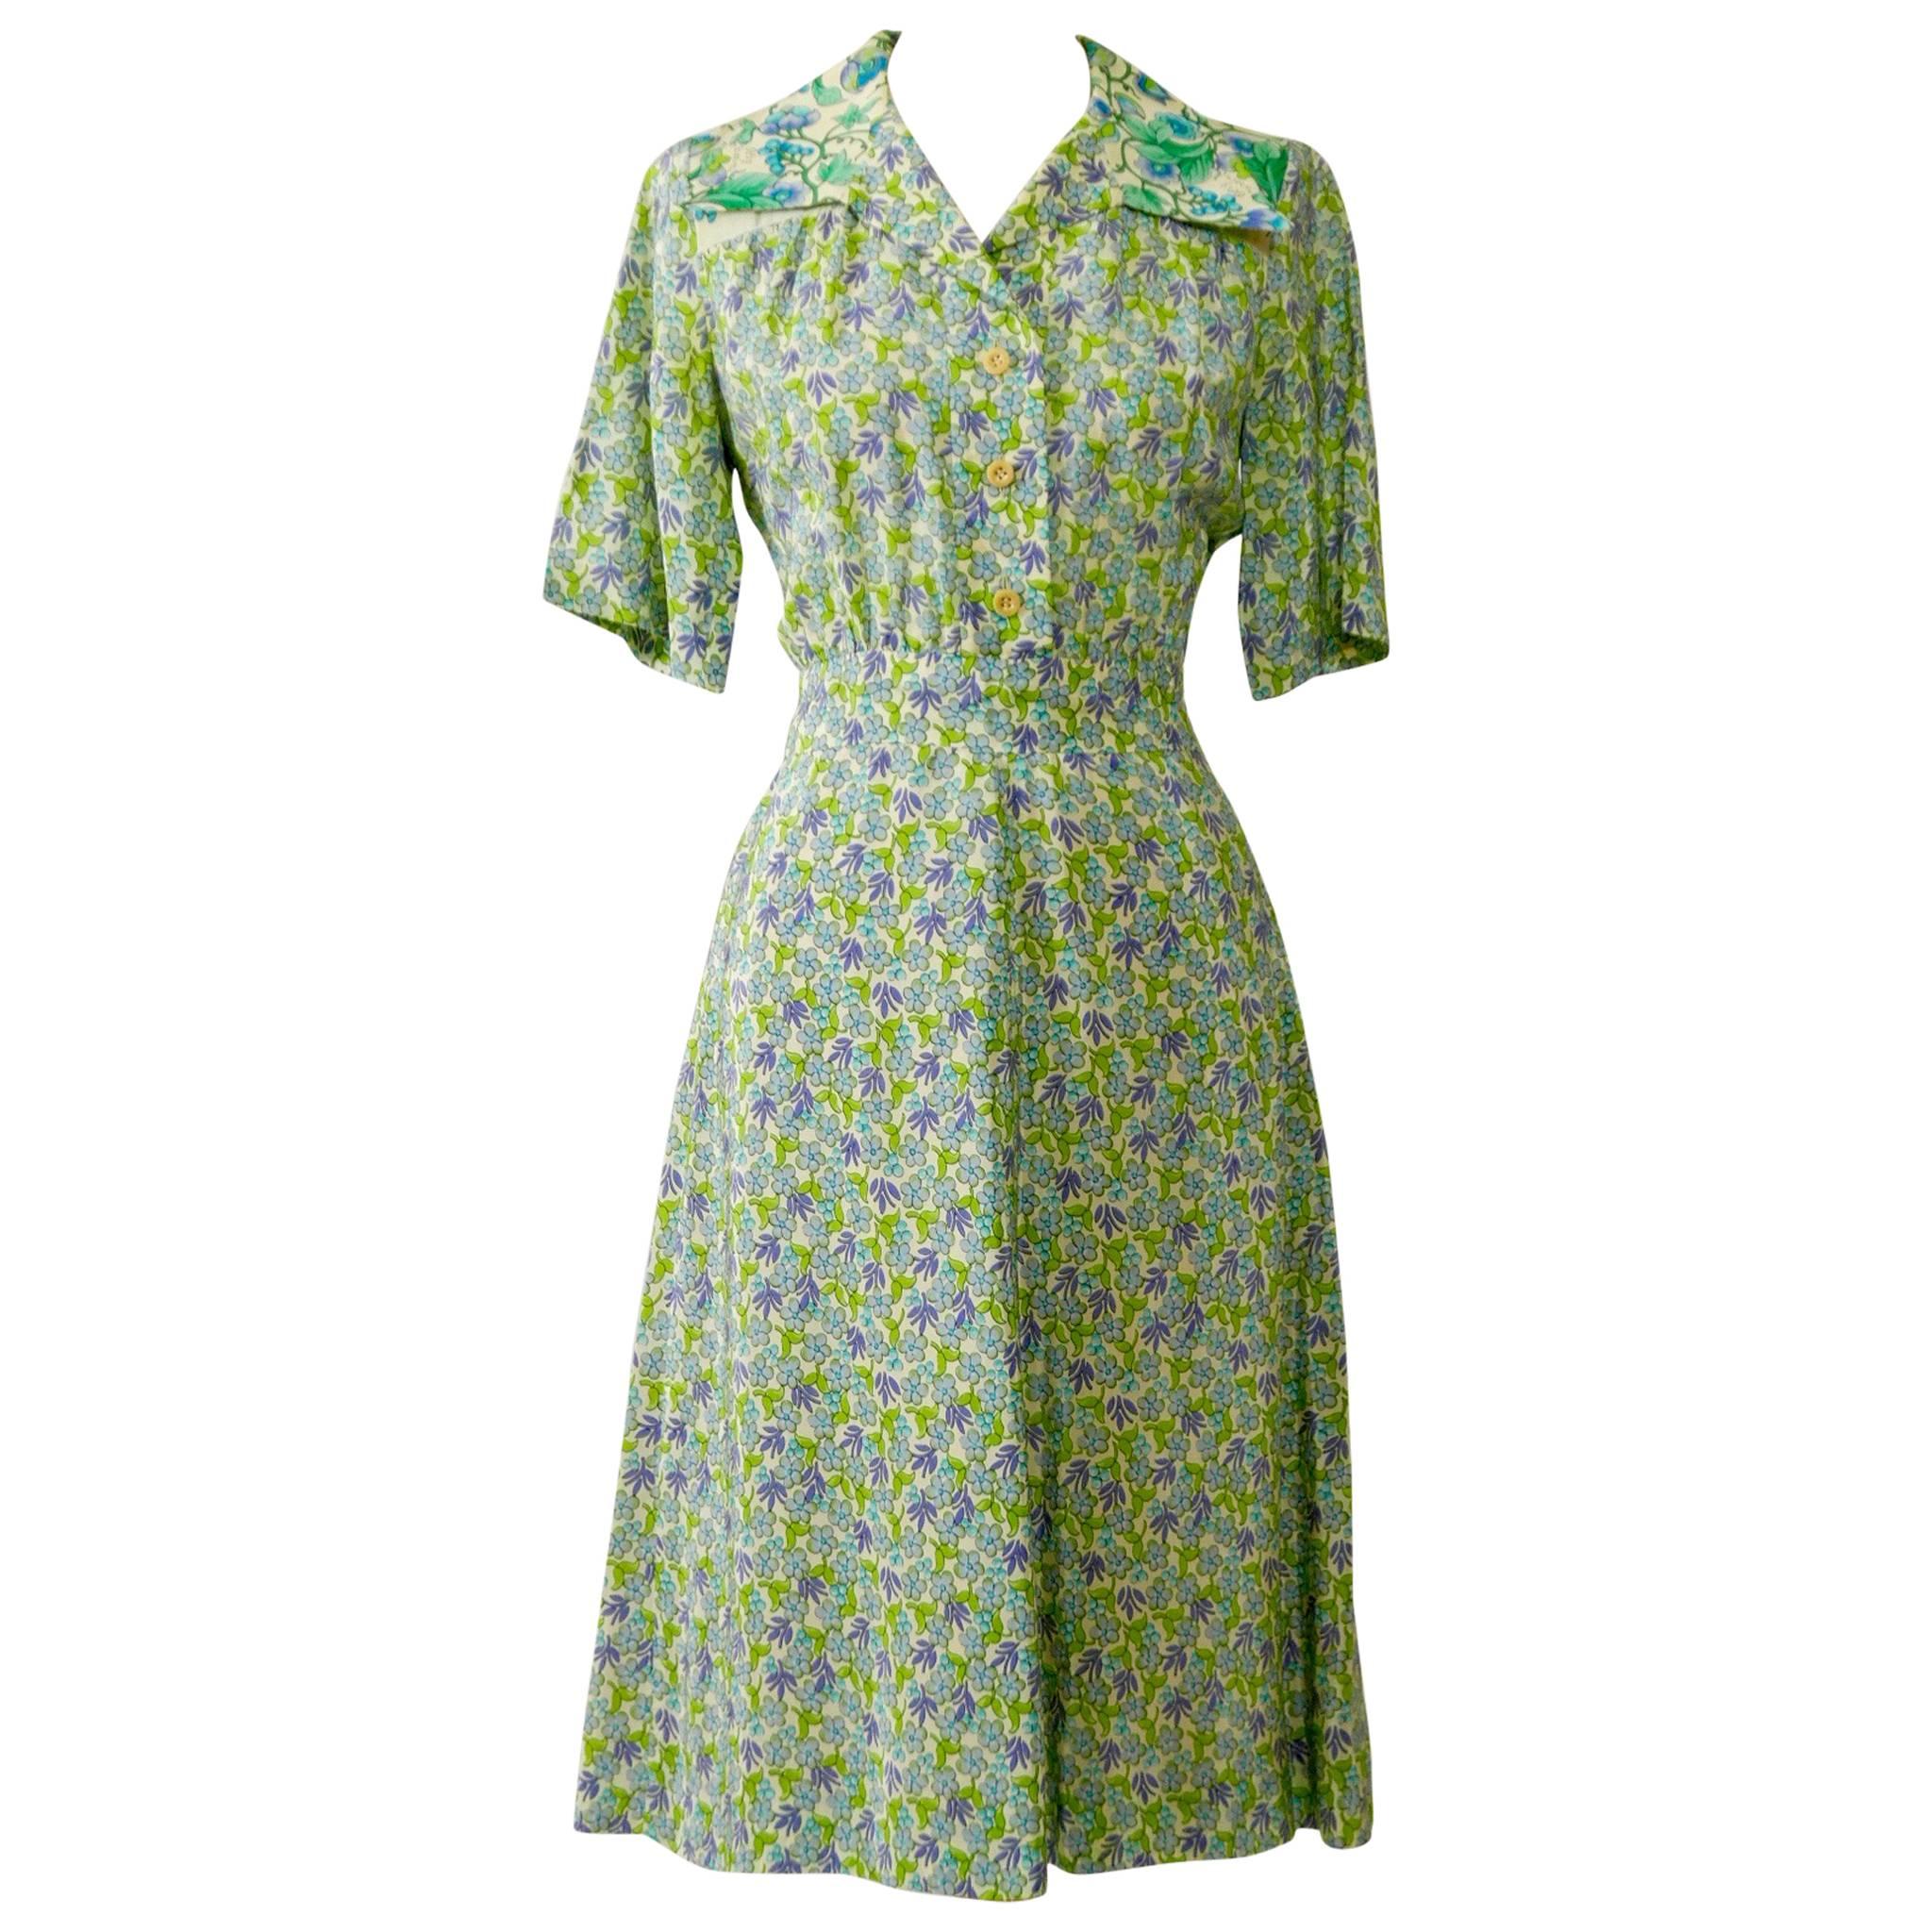 1970s OLEG CASSINI Green Floral Print Dress